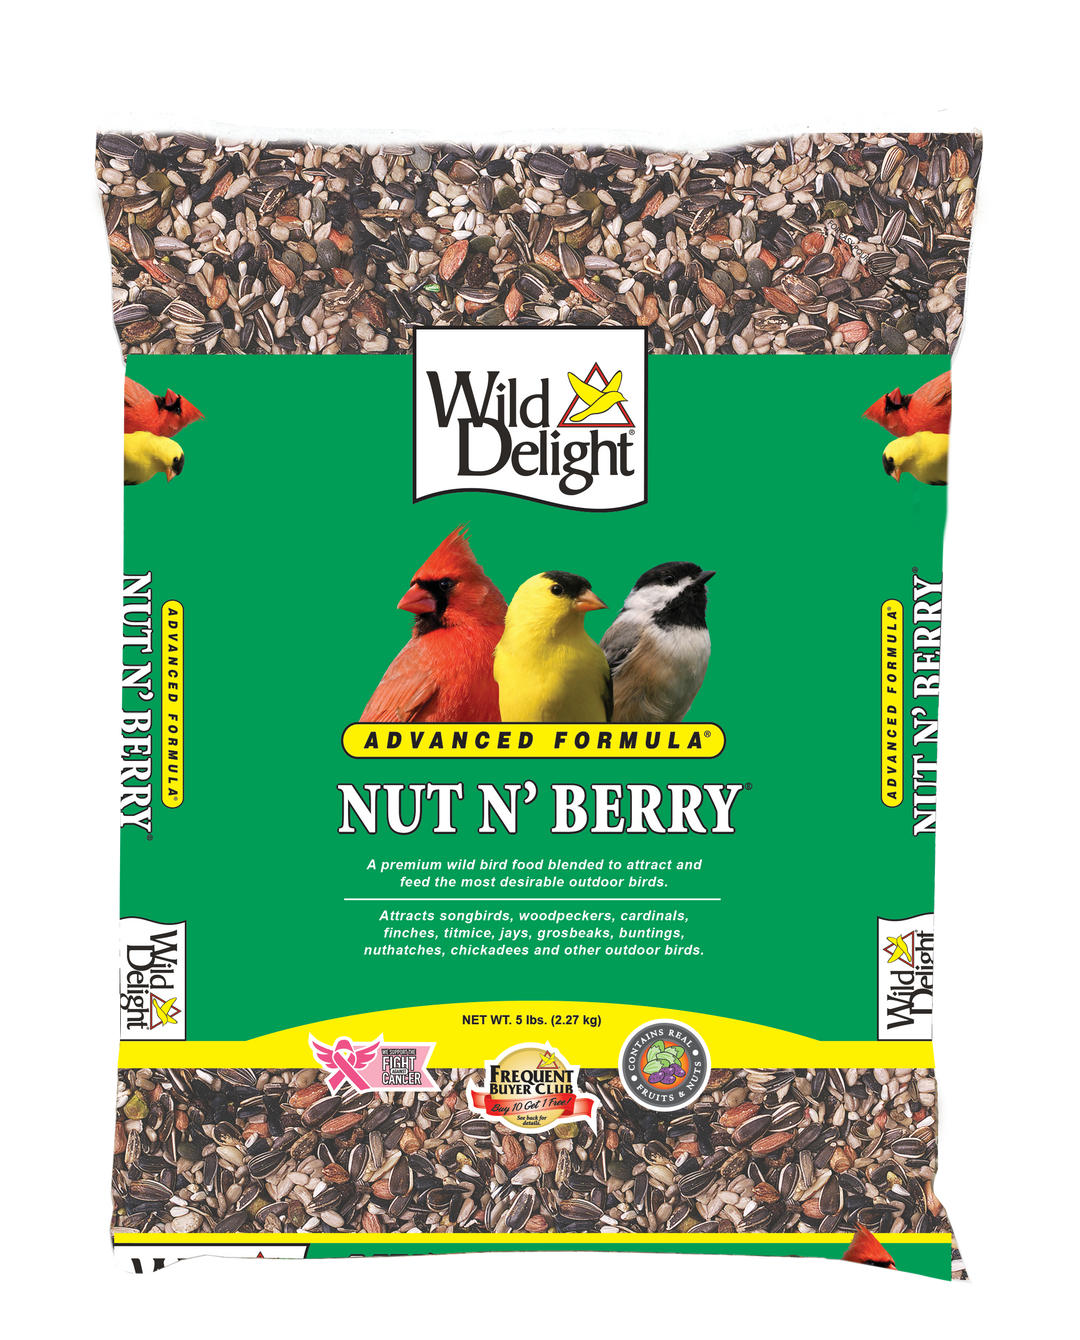 Wild Delight Nut N' Berry Bird Seed